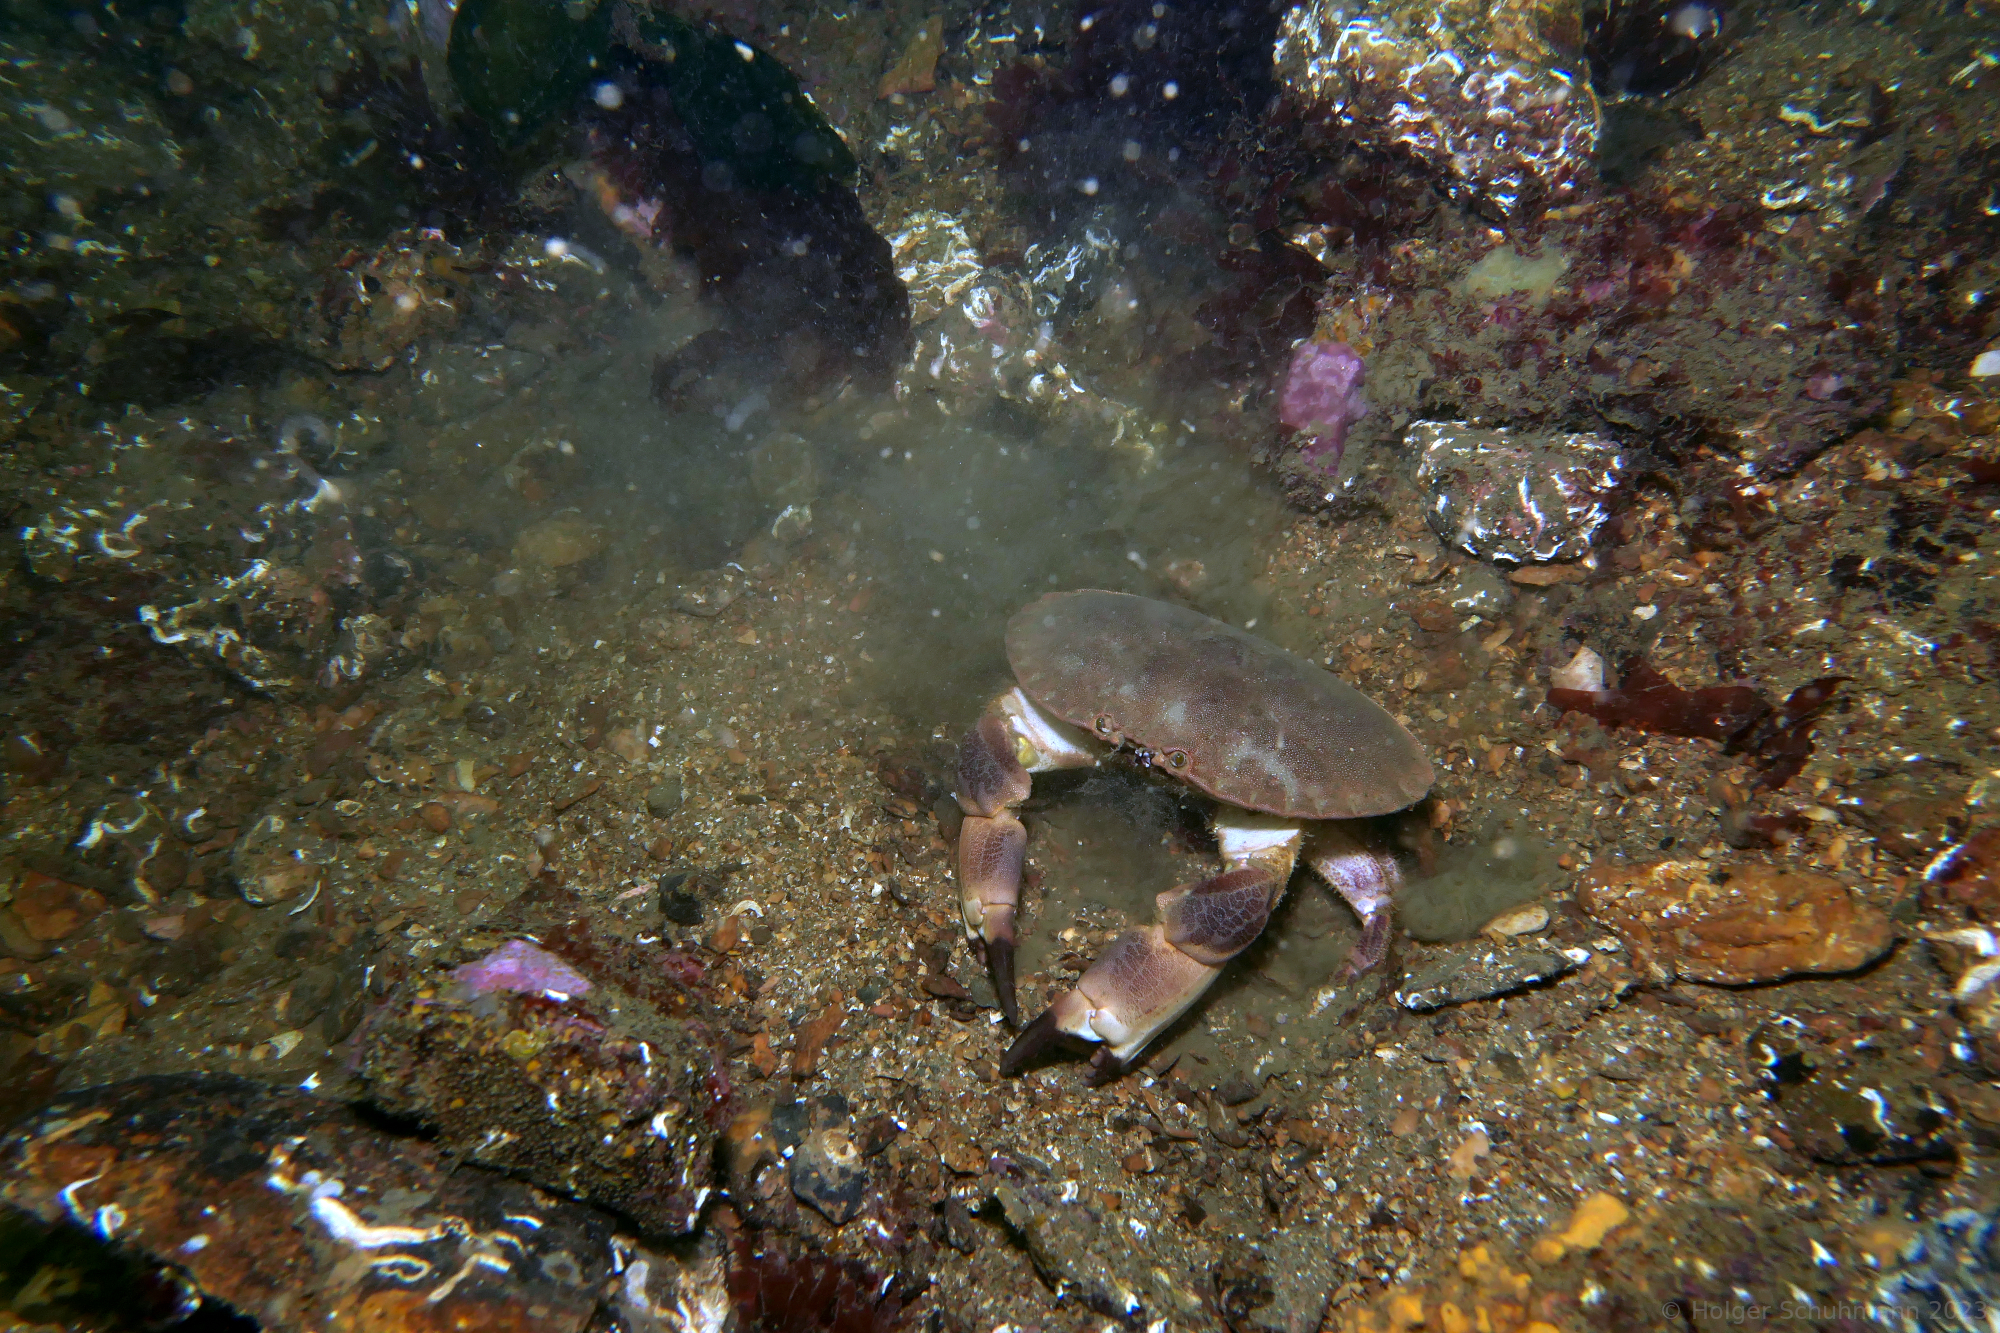 Edible crab kicking up the silt